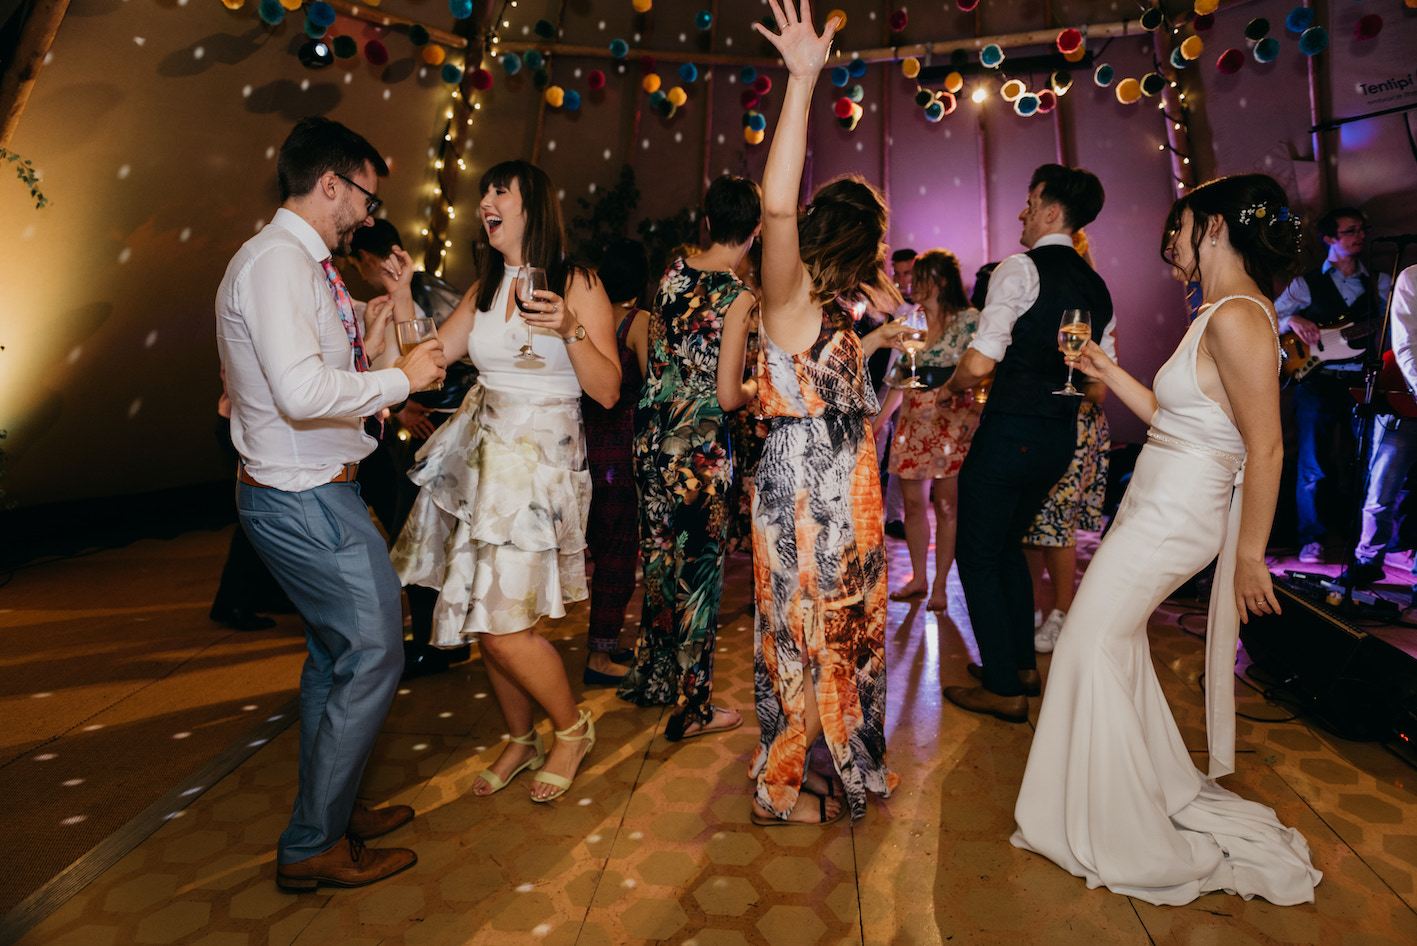 Dance floor at a tipi wedding